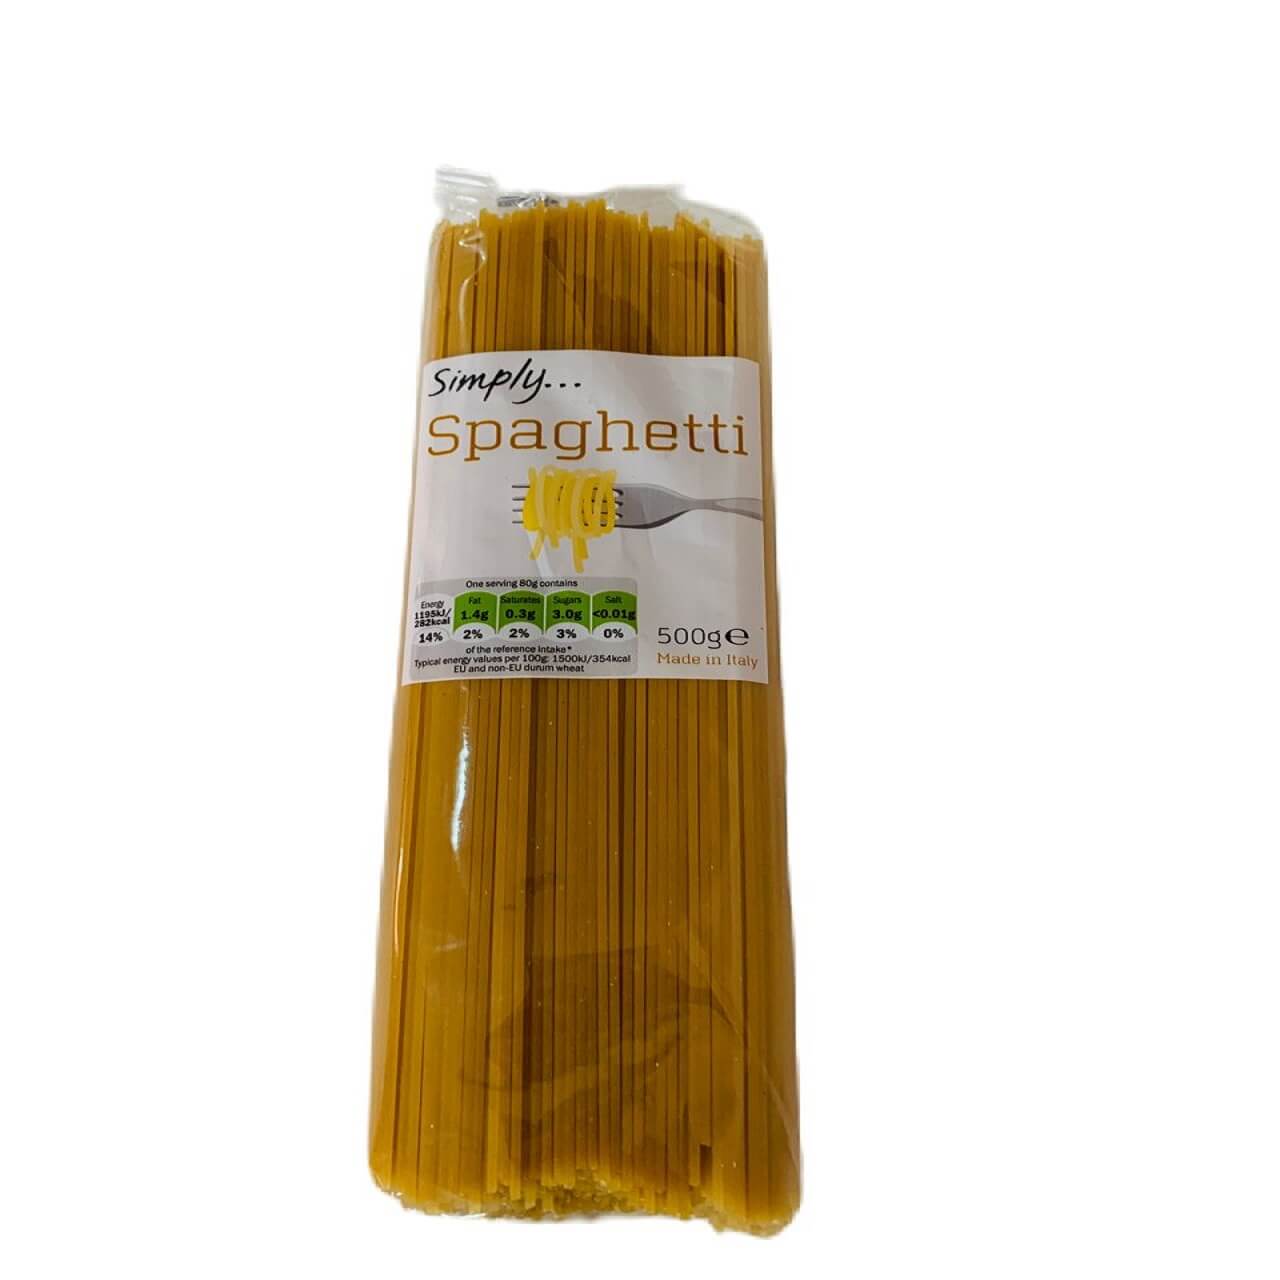 a sachet of 500g of simply spaghetti